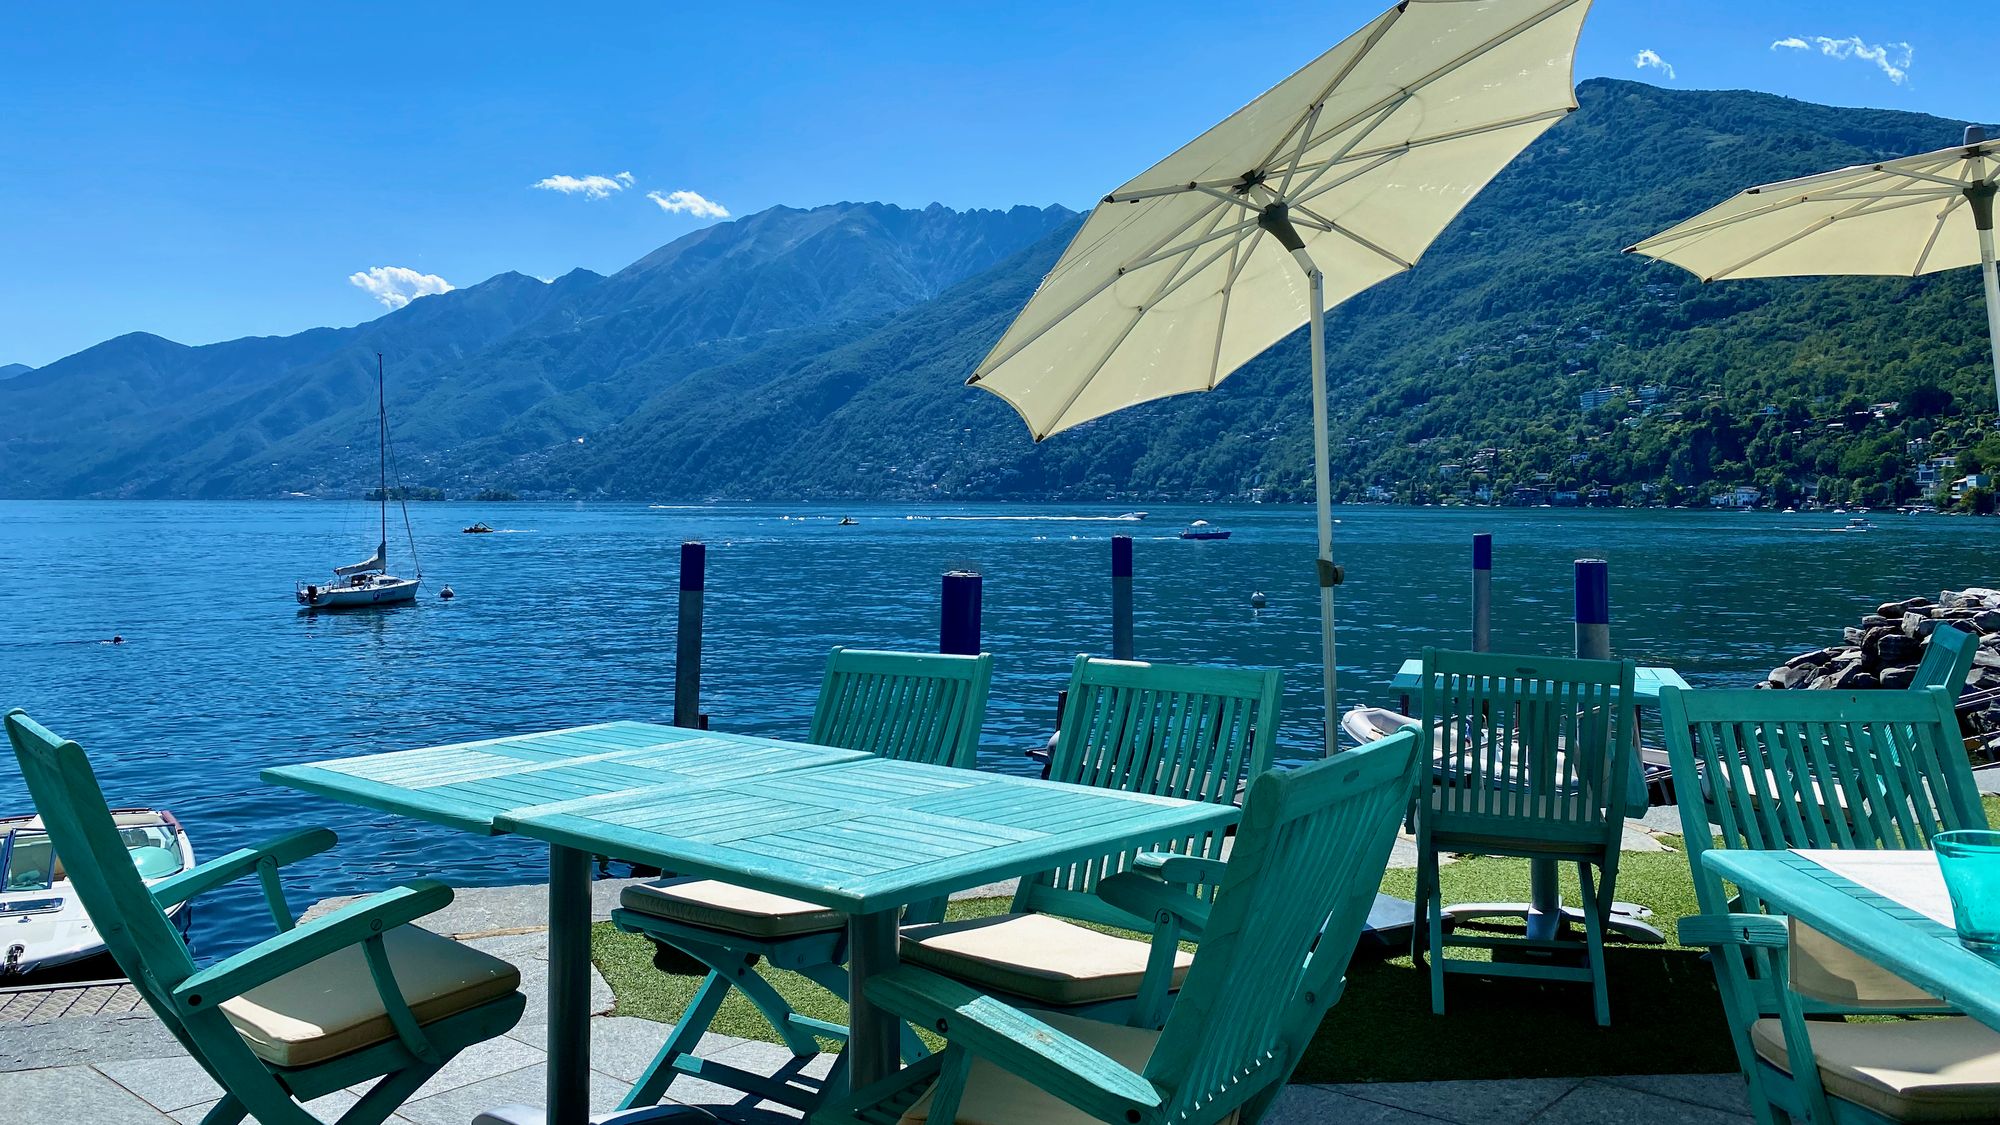 Terrace of Restaurant & Lounge Marina Ascona on the shore of Lake Maggiore